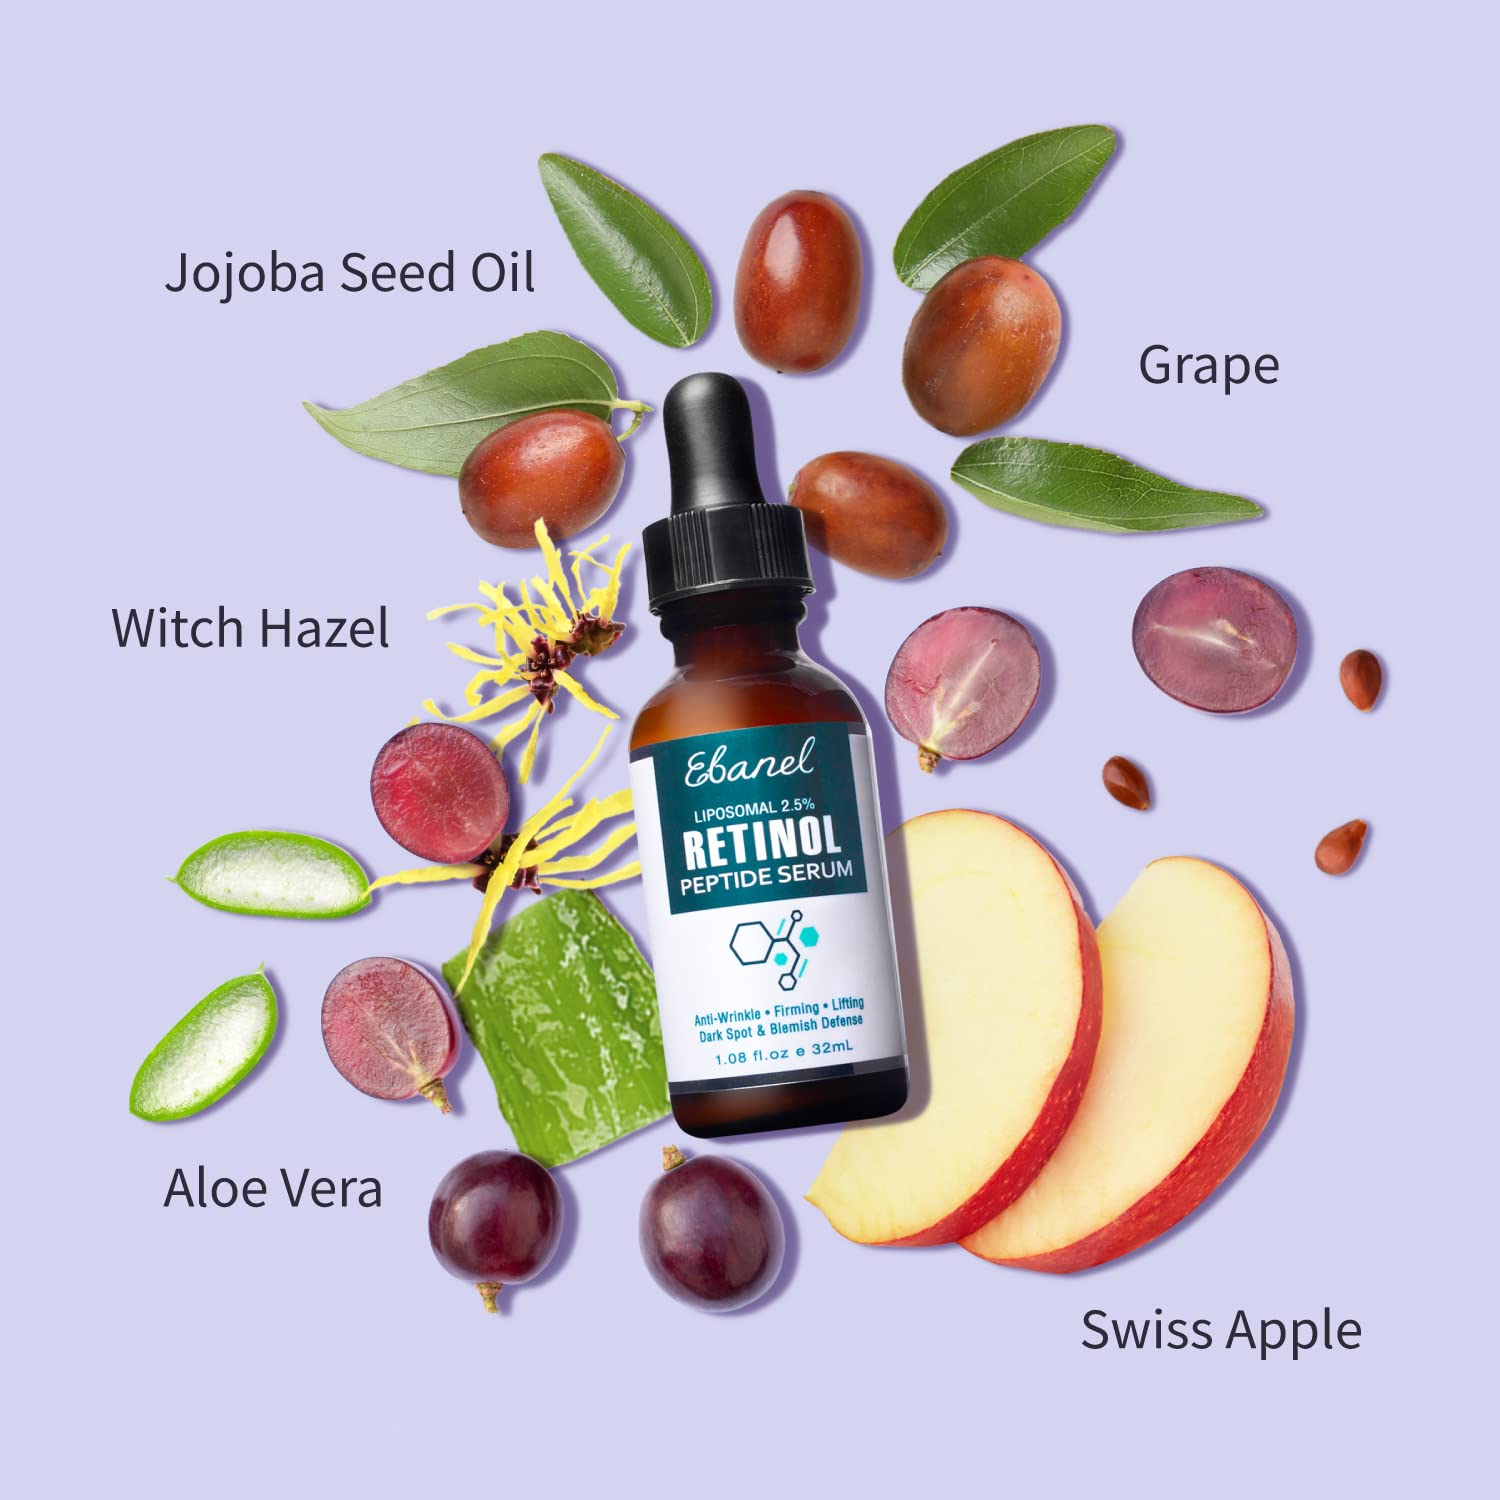 Jojoba seed oil, witch hazel, grape, aloe vera, swiss apple.